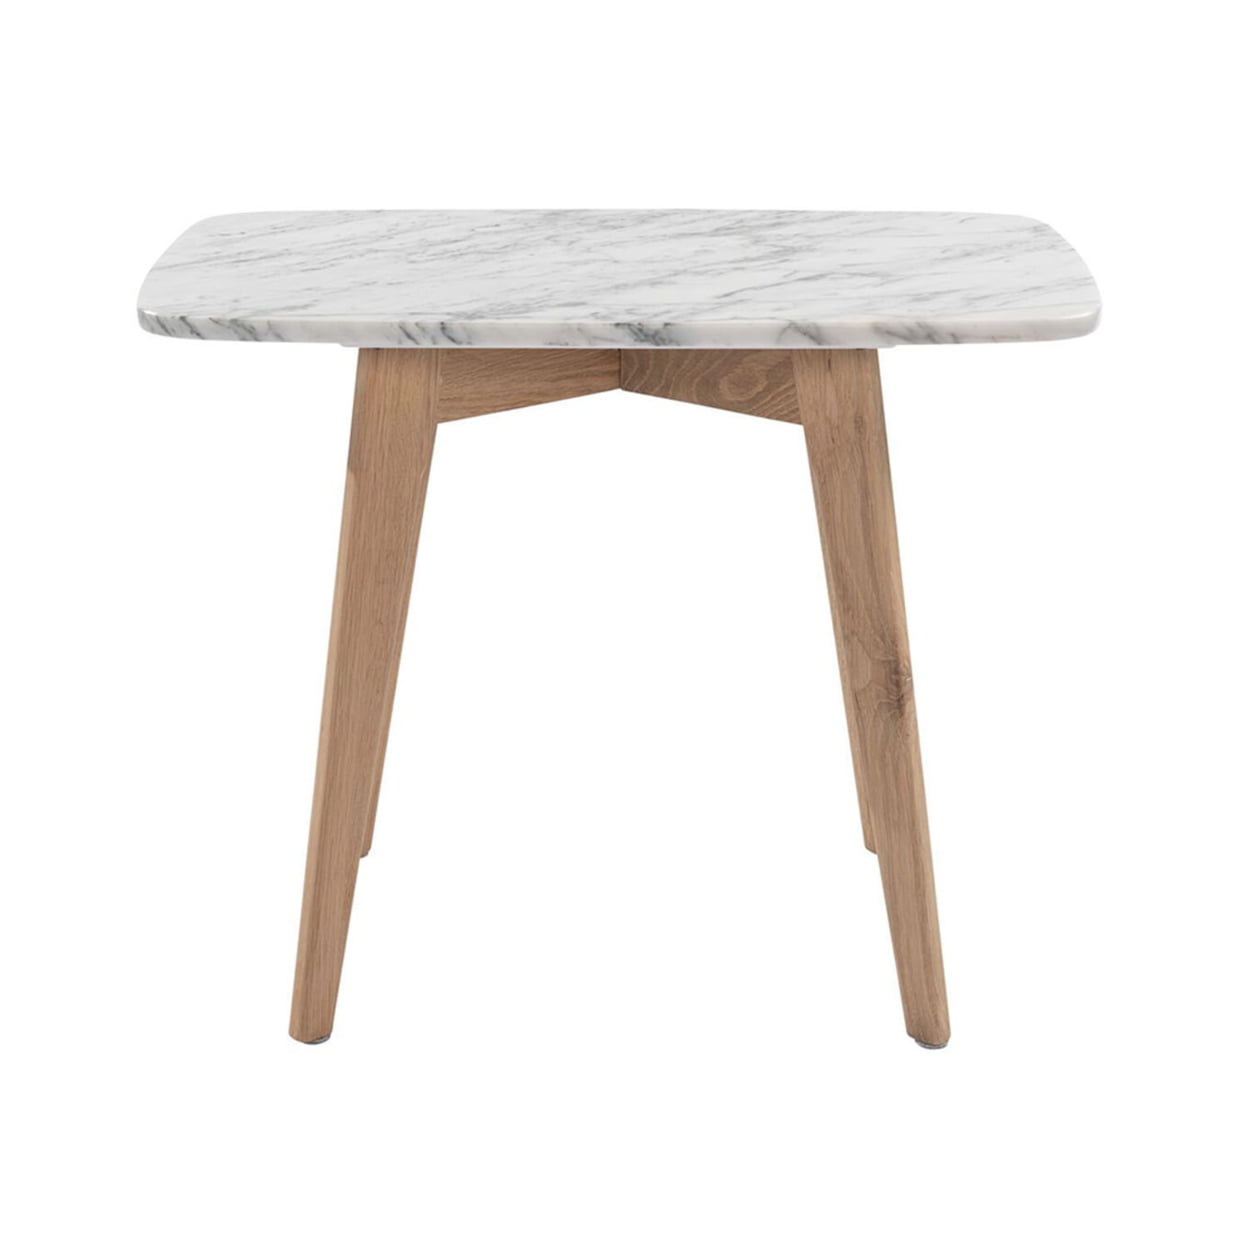 Tbc-4064-pt1913-wht 12 X 21 In. Cima Rectangular Italian Carrara White Marble Table With Oak Legs